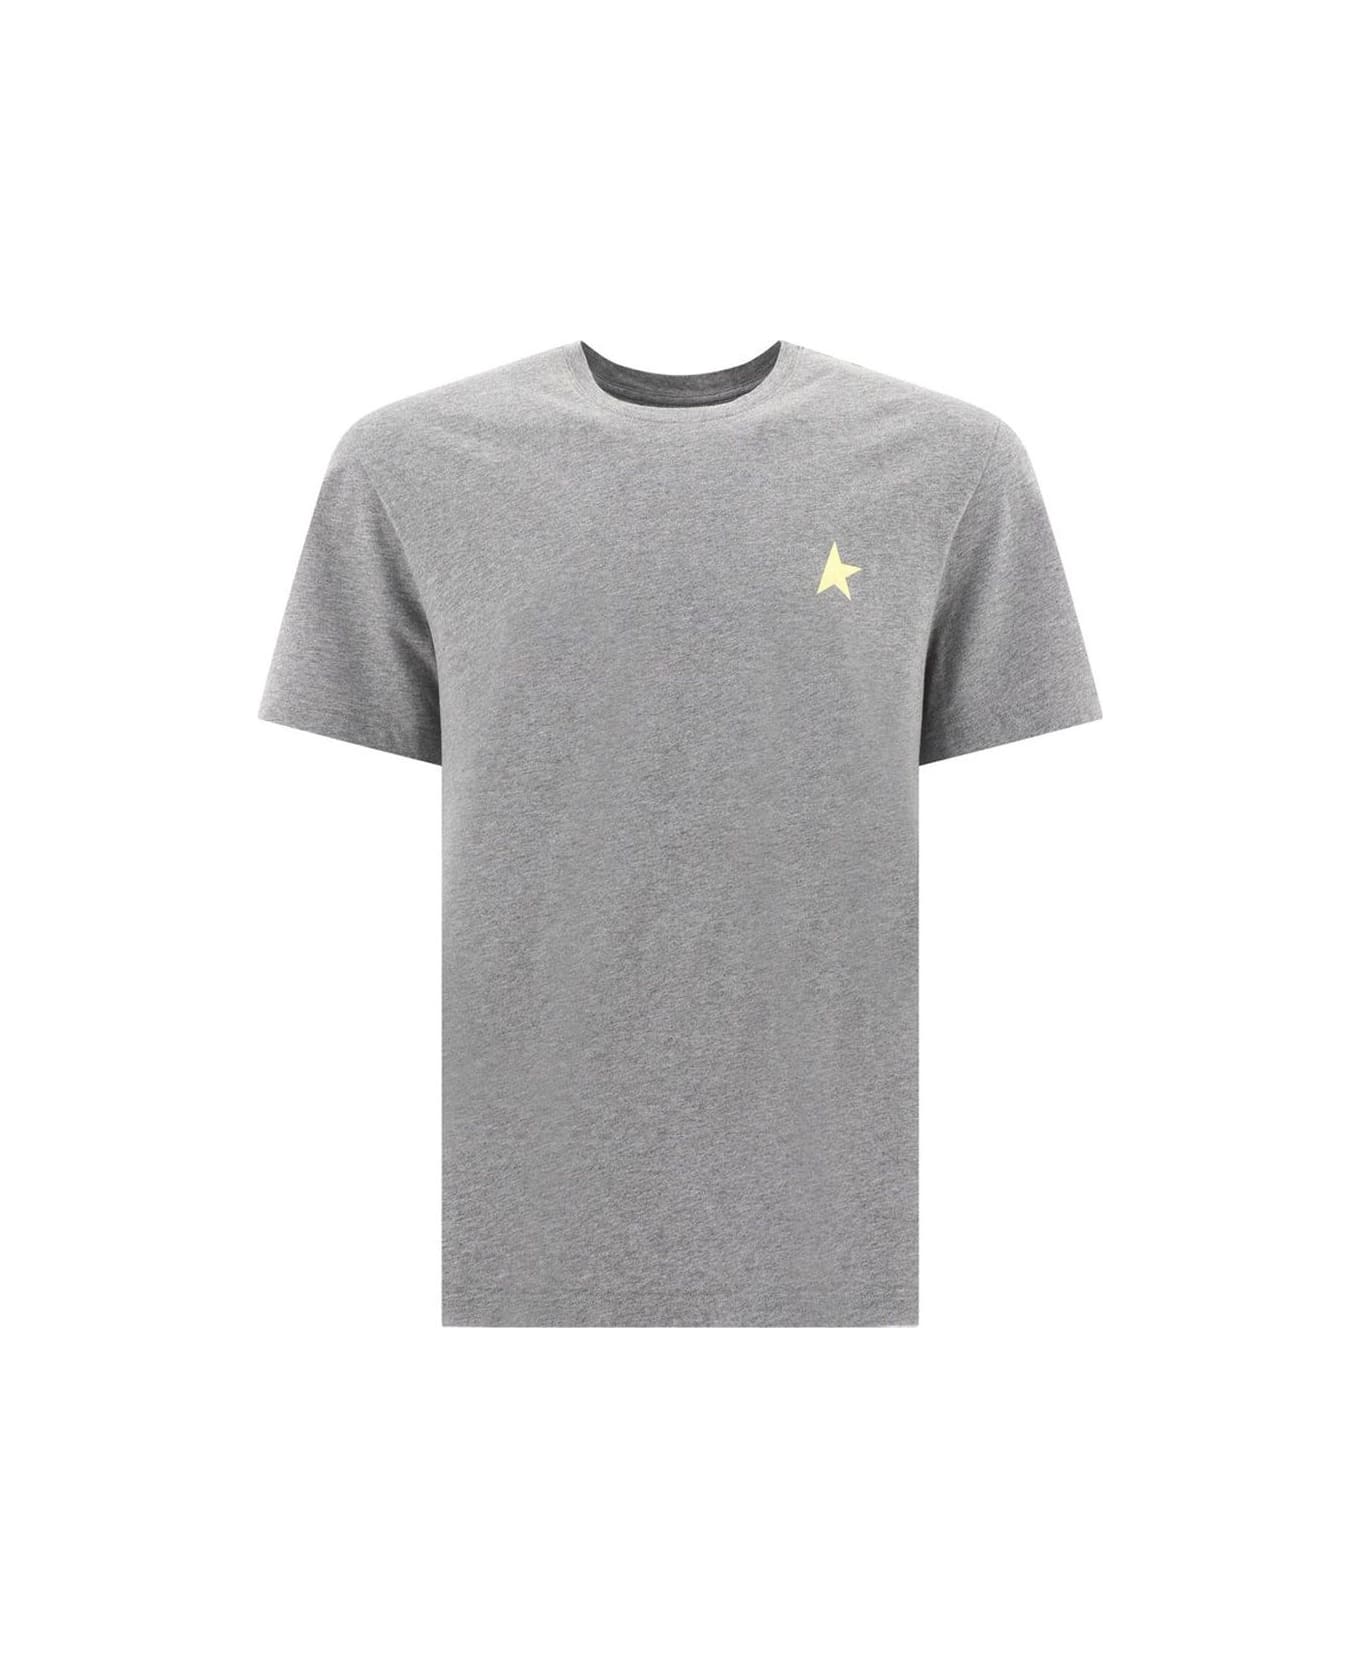 Golden Goose Star T-shirt - Grigio